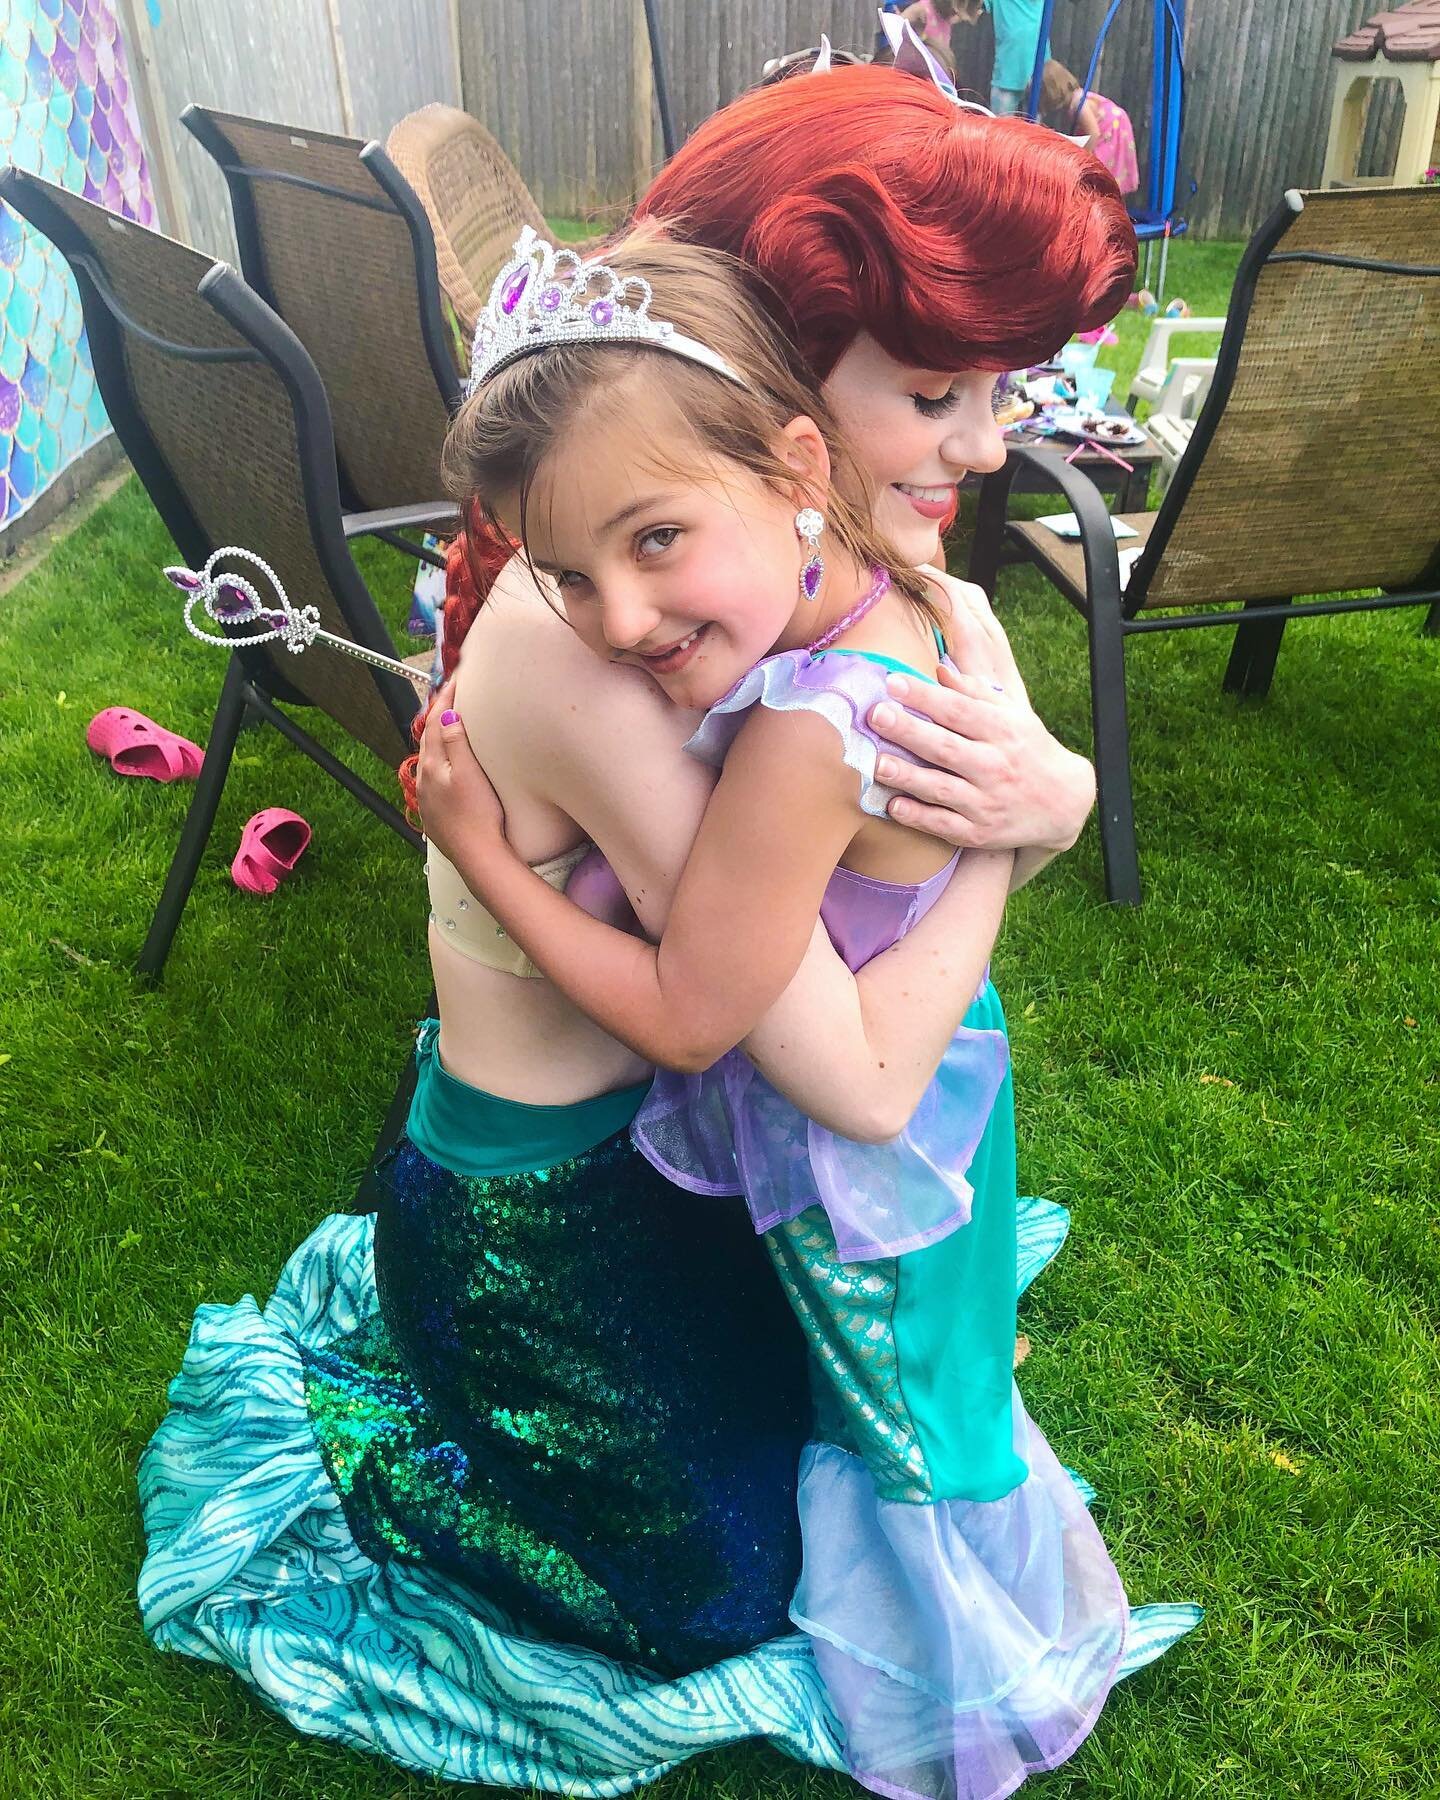 Mermaid hugs for a #MermaidMonday!
🧜&zwj;♀️
Book a magical mer-memory at www.sparkadreamprincessparties.com!
.
.
.
.
.
.
.
.
.
.
.
.
.
.
#DanversMa #SalemMa #PeabodyMa #BeverlyMa #MiddletonMa #swampscottma #boston #lynnma #marbleheadma  #princesspar